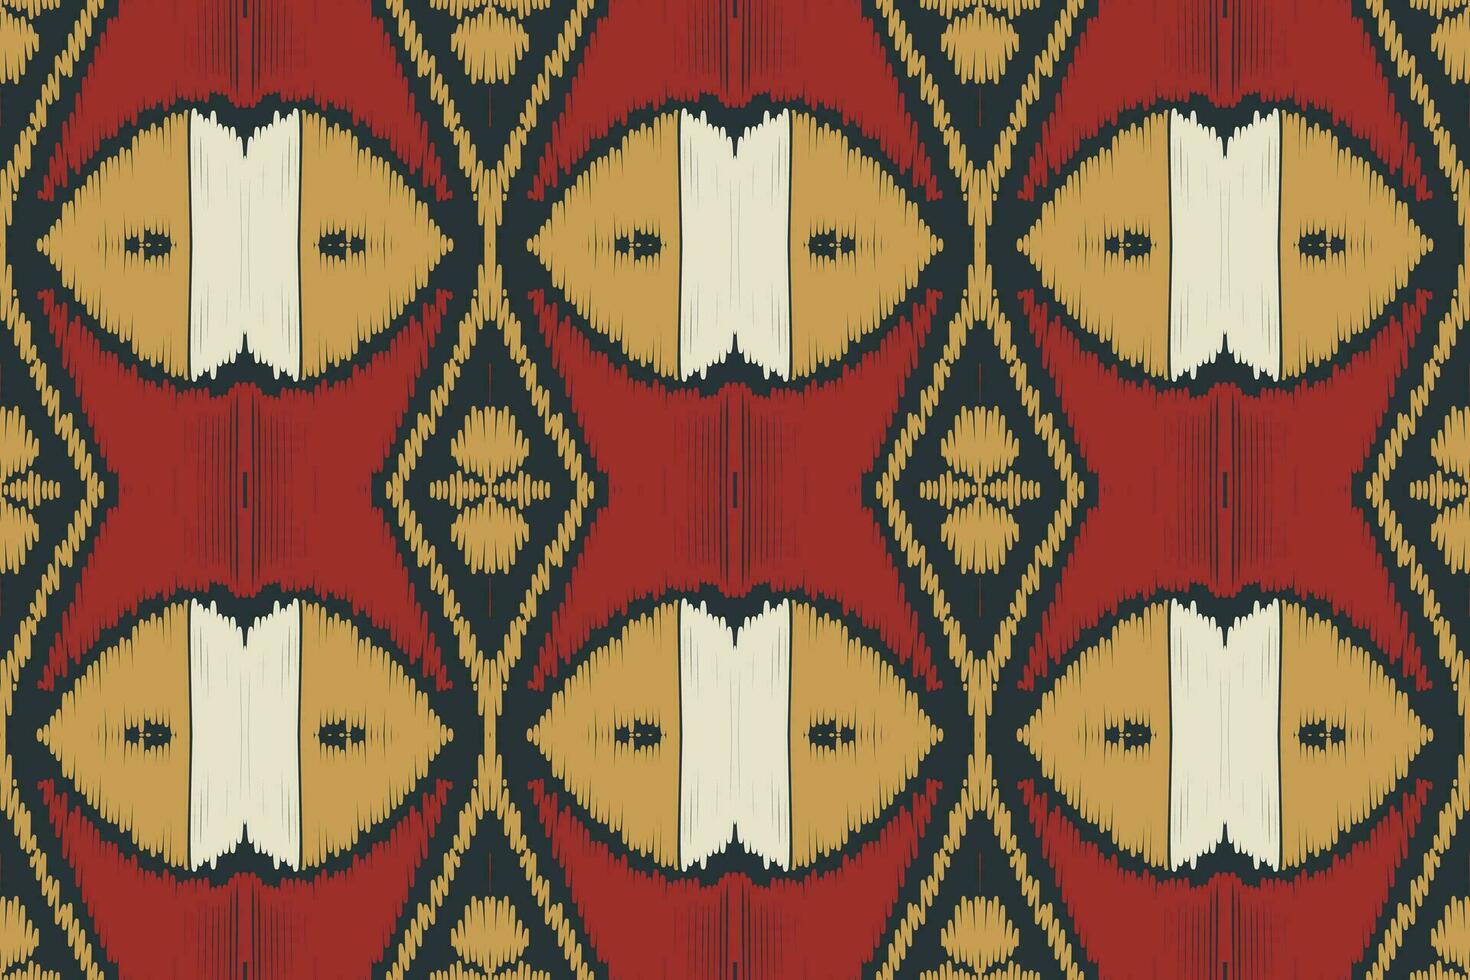 ikat damasco paisley bordado fundo. ikat padrões geométrico étnico oriental padronizar tradicional. ikat asteca estilo abstrato Projeto para impressão textura, tecido, saree, sari, tapete. vetor